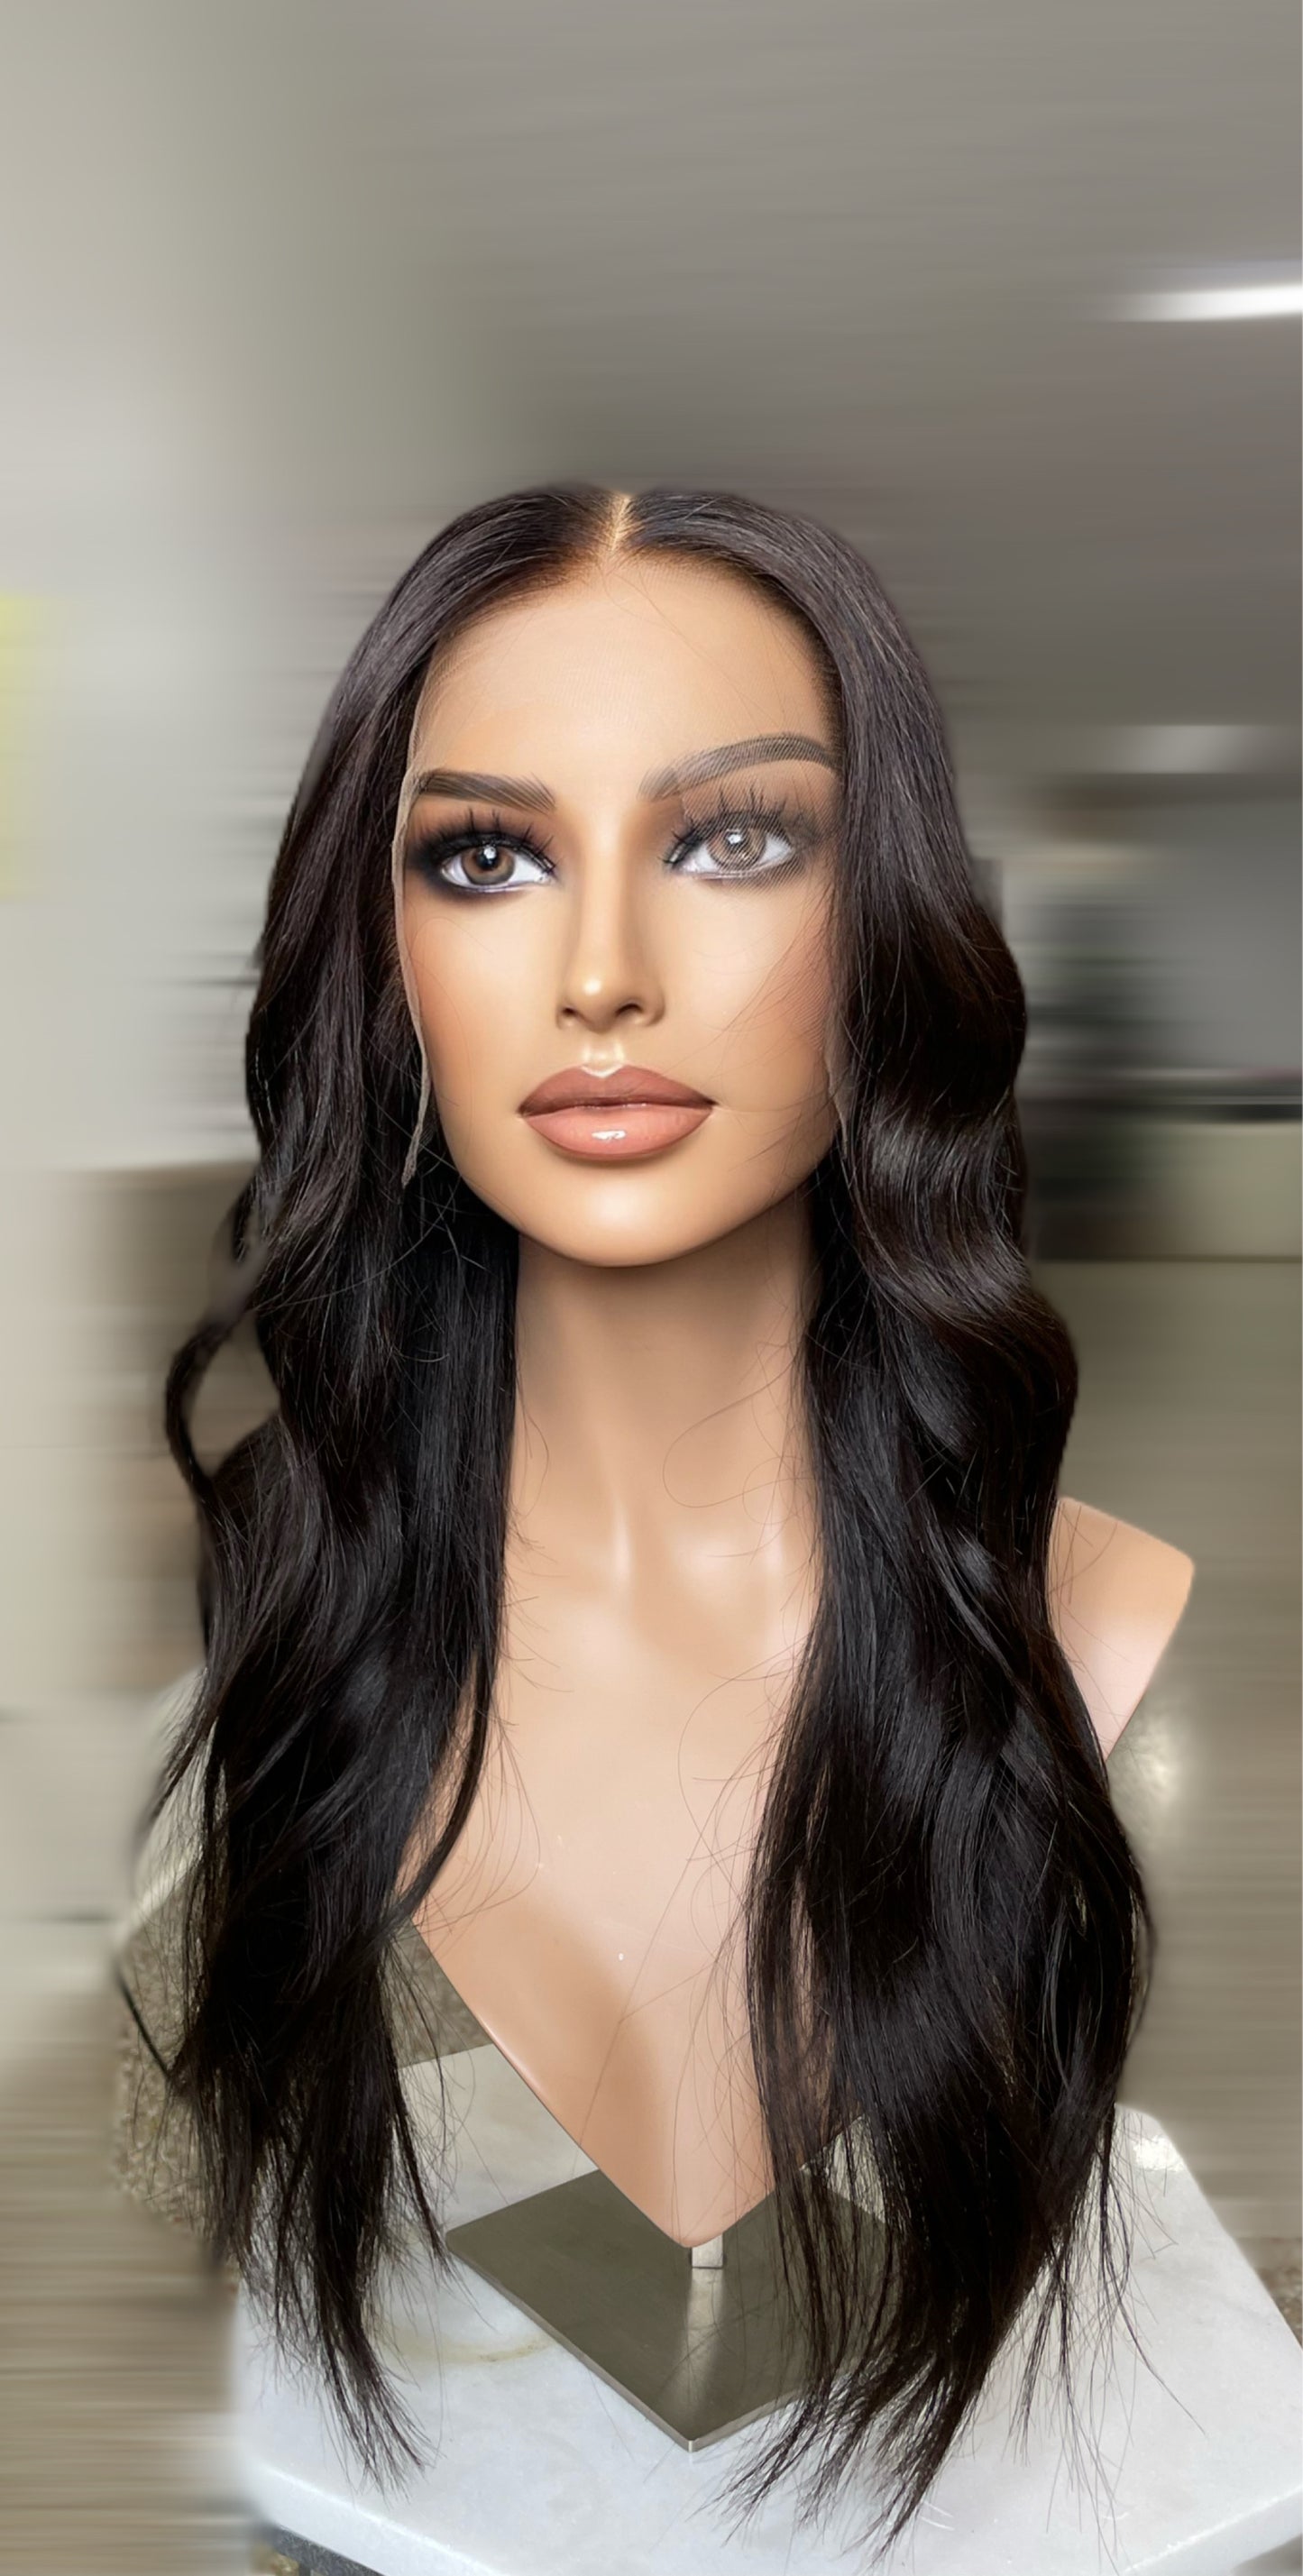 Nadia-PREORDER- GB1- Virgin Hair Collection-